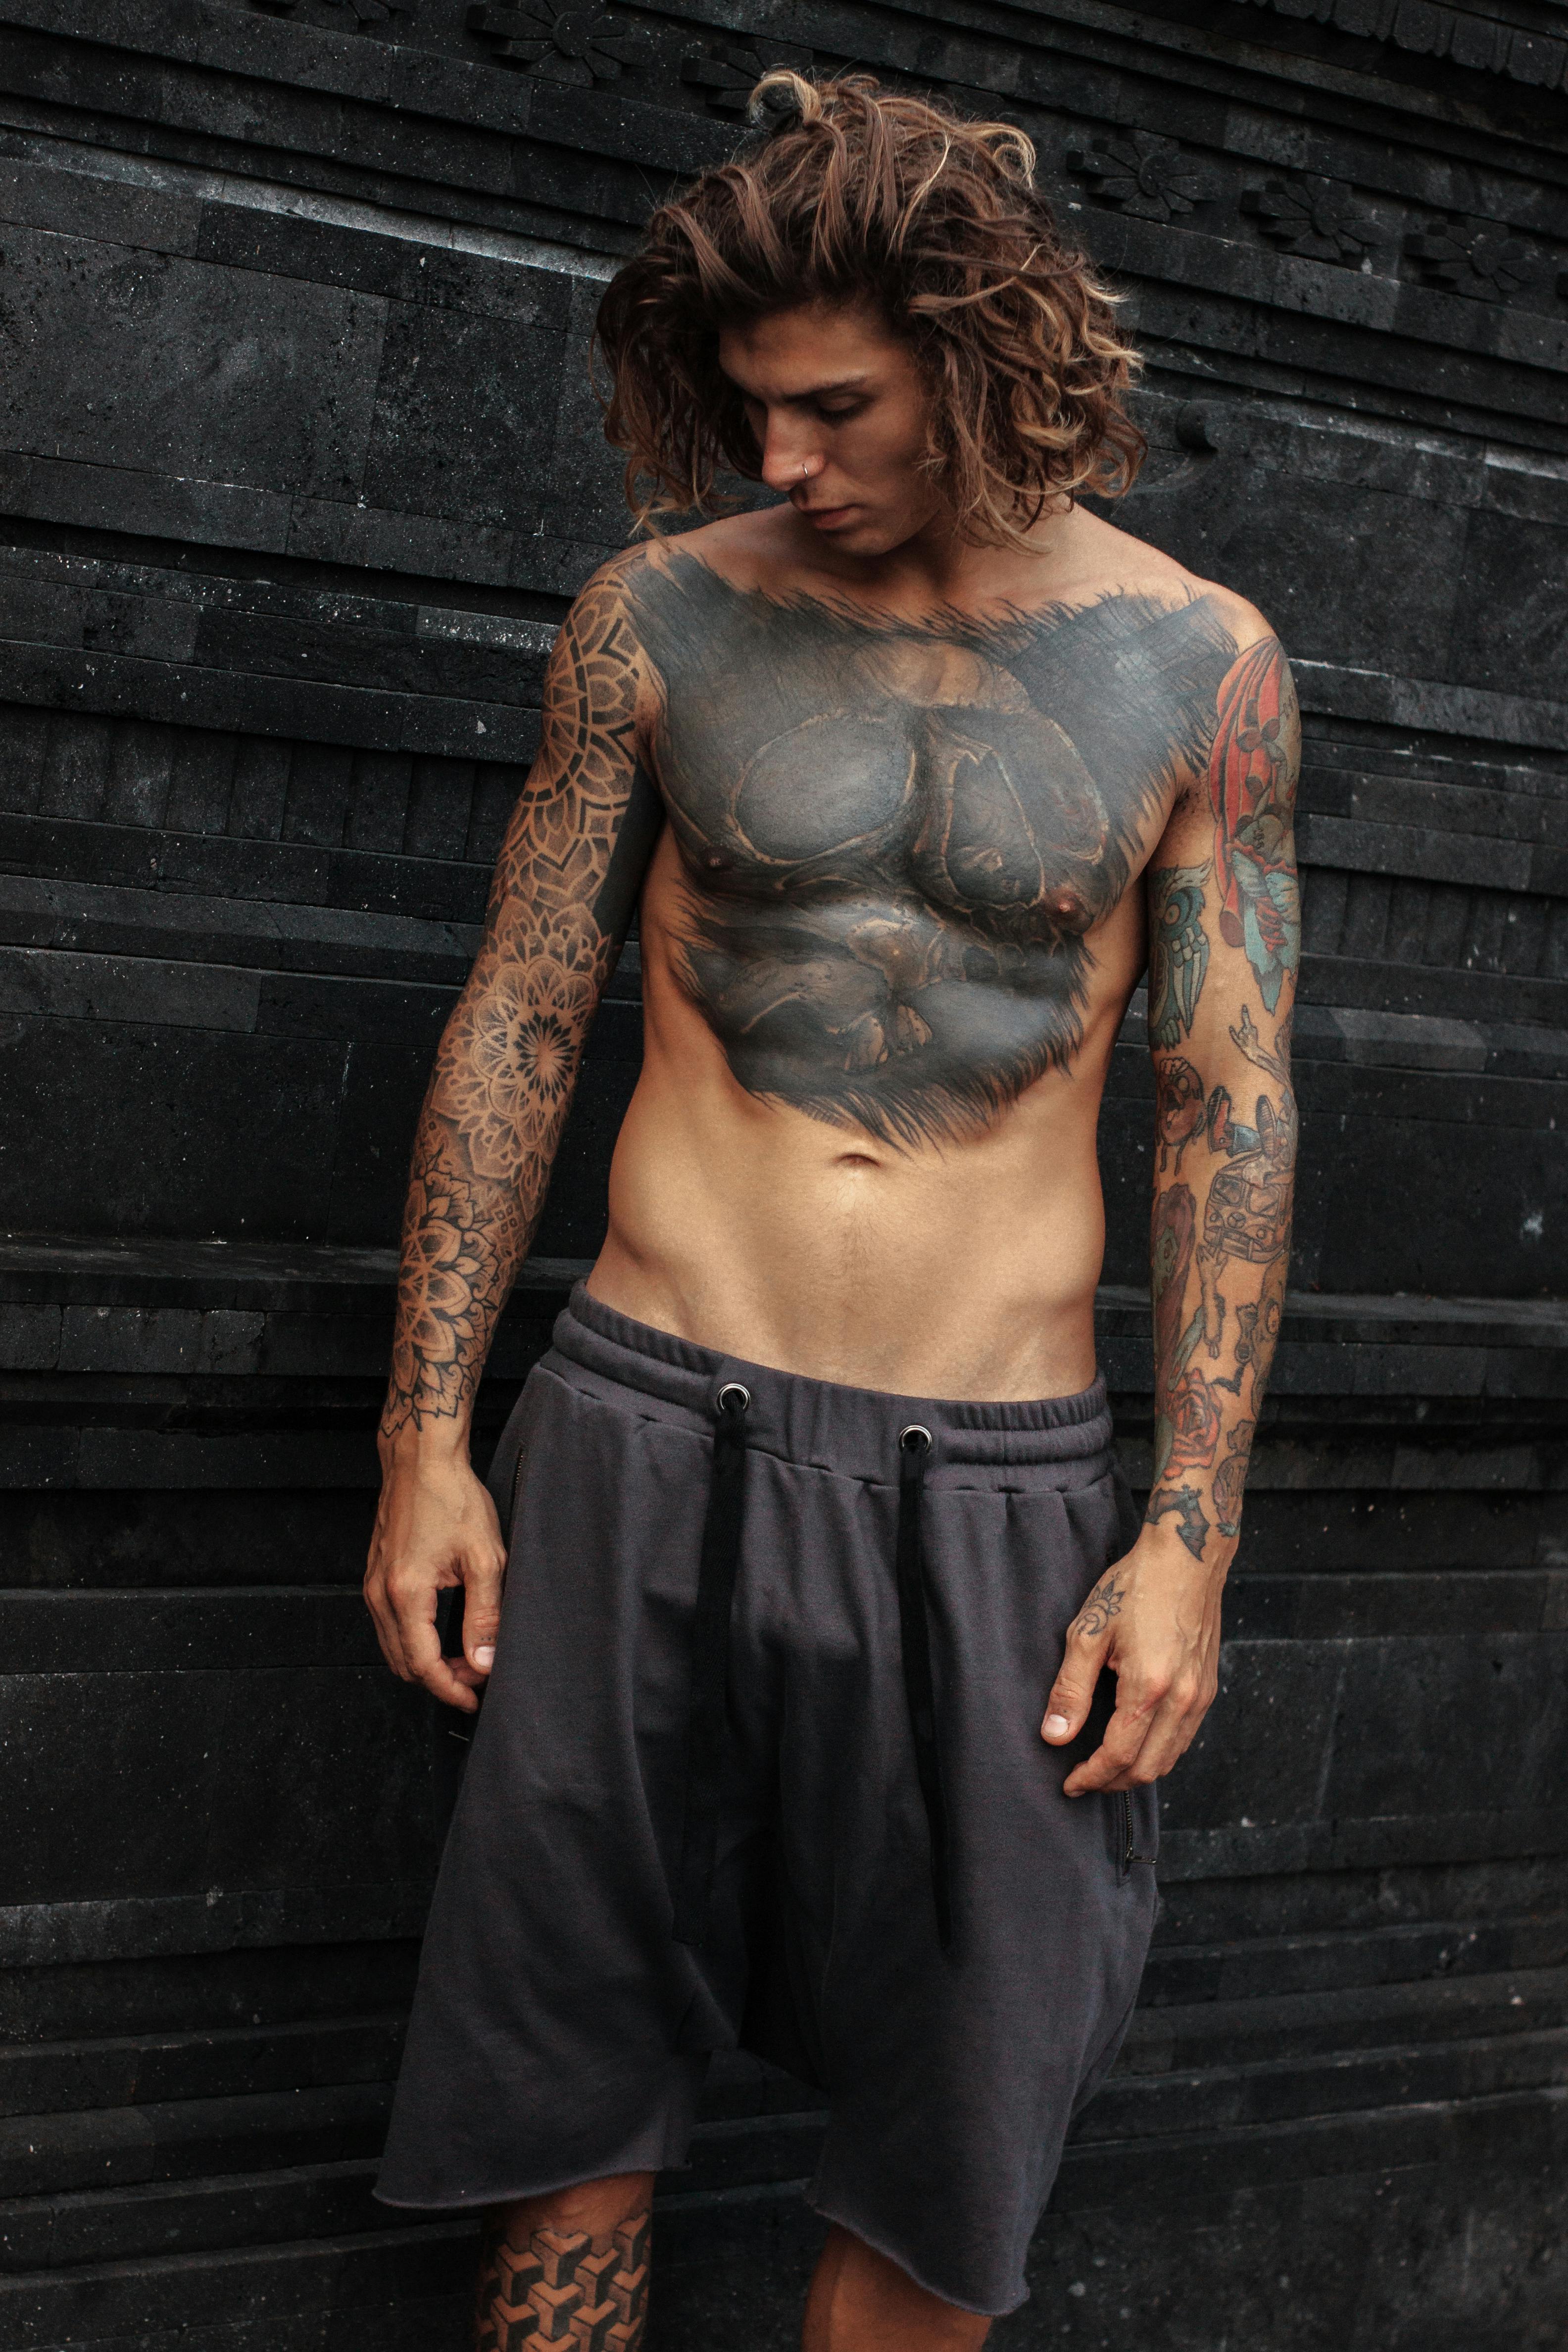 Tattoos For Men cool forearm ideas #forearm #tattoo #ideas #men #masculine # tattoos | Tattoos for guys, Tattoos, Body art tattoos